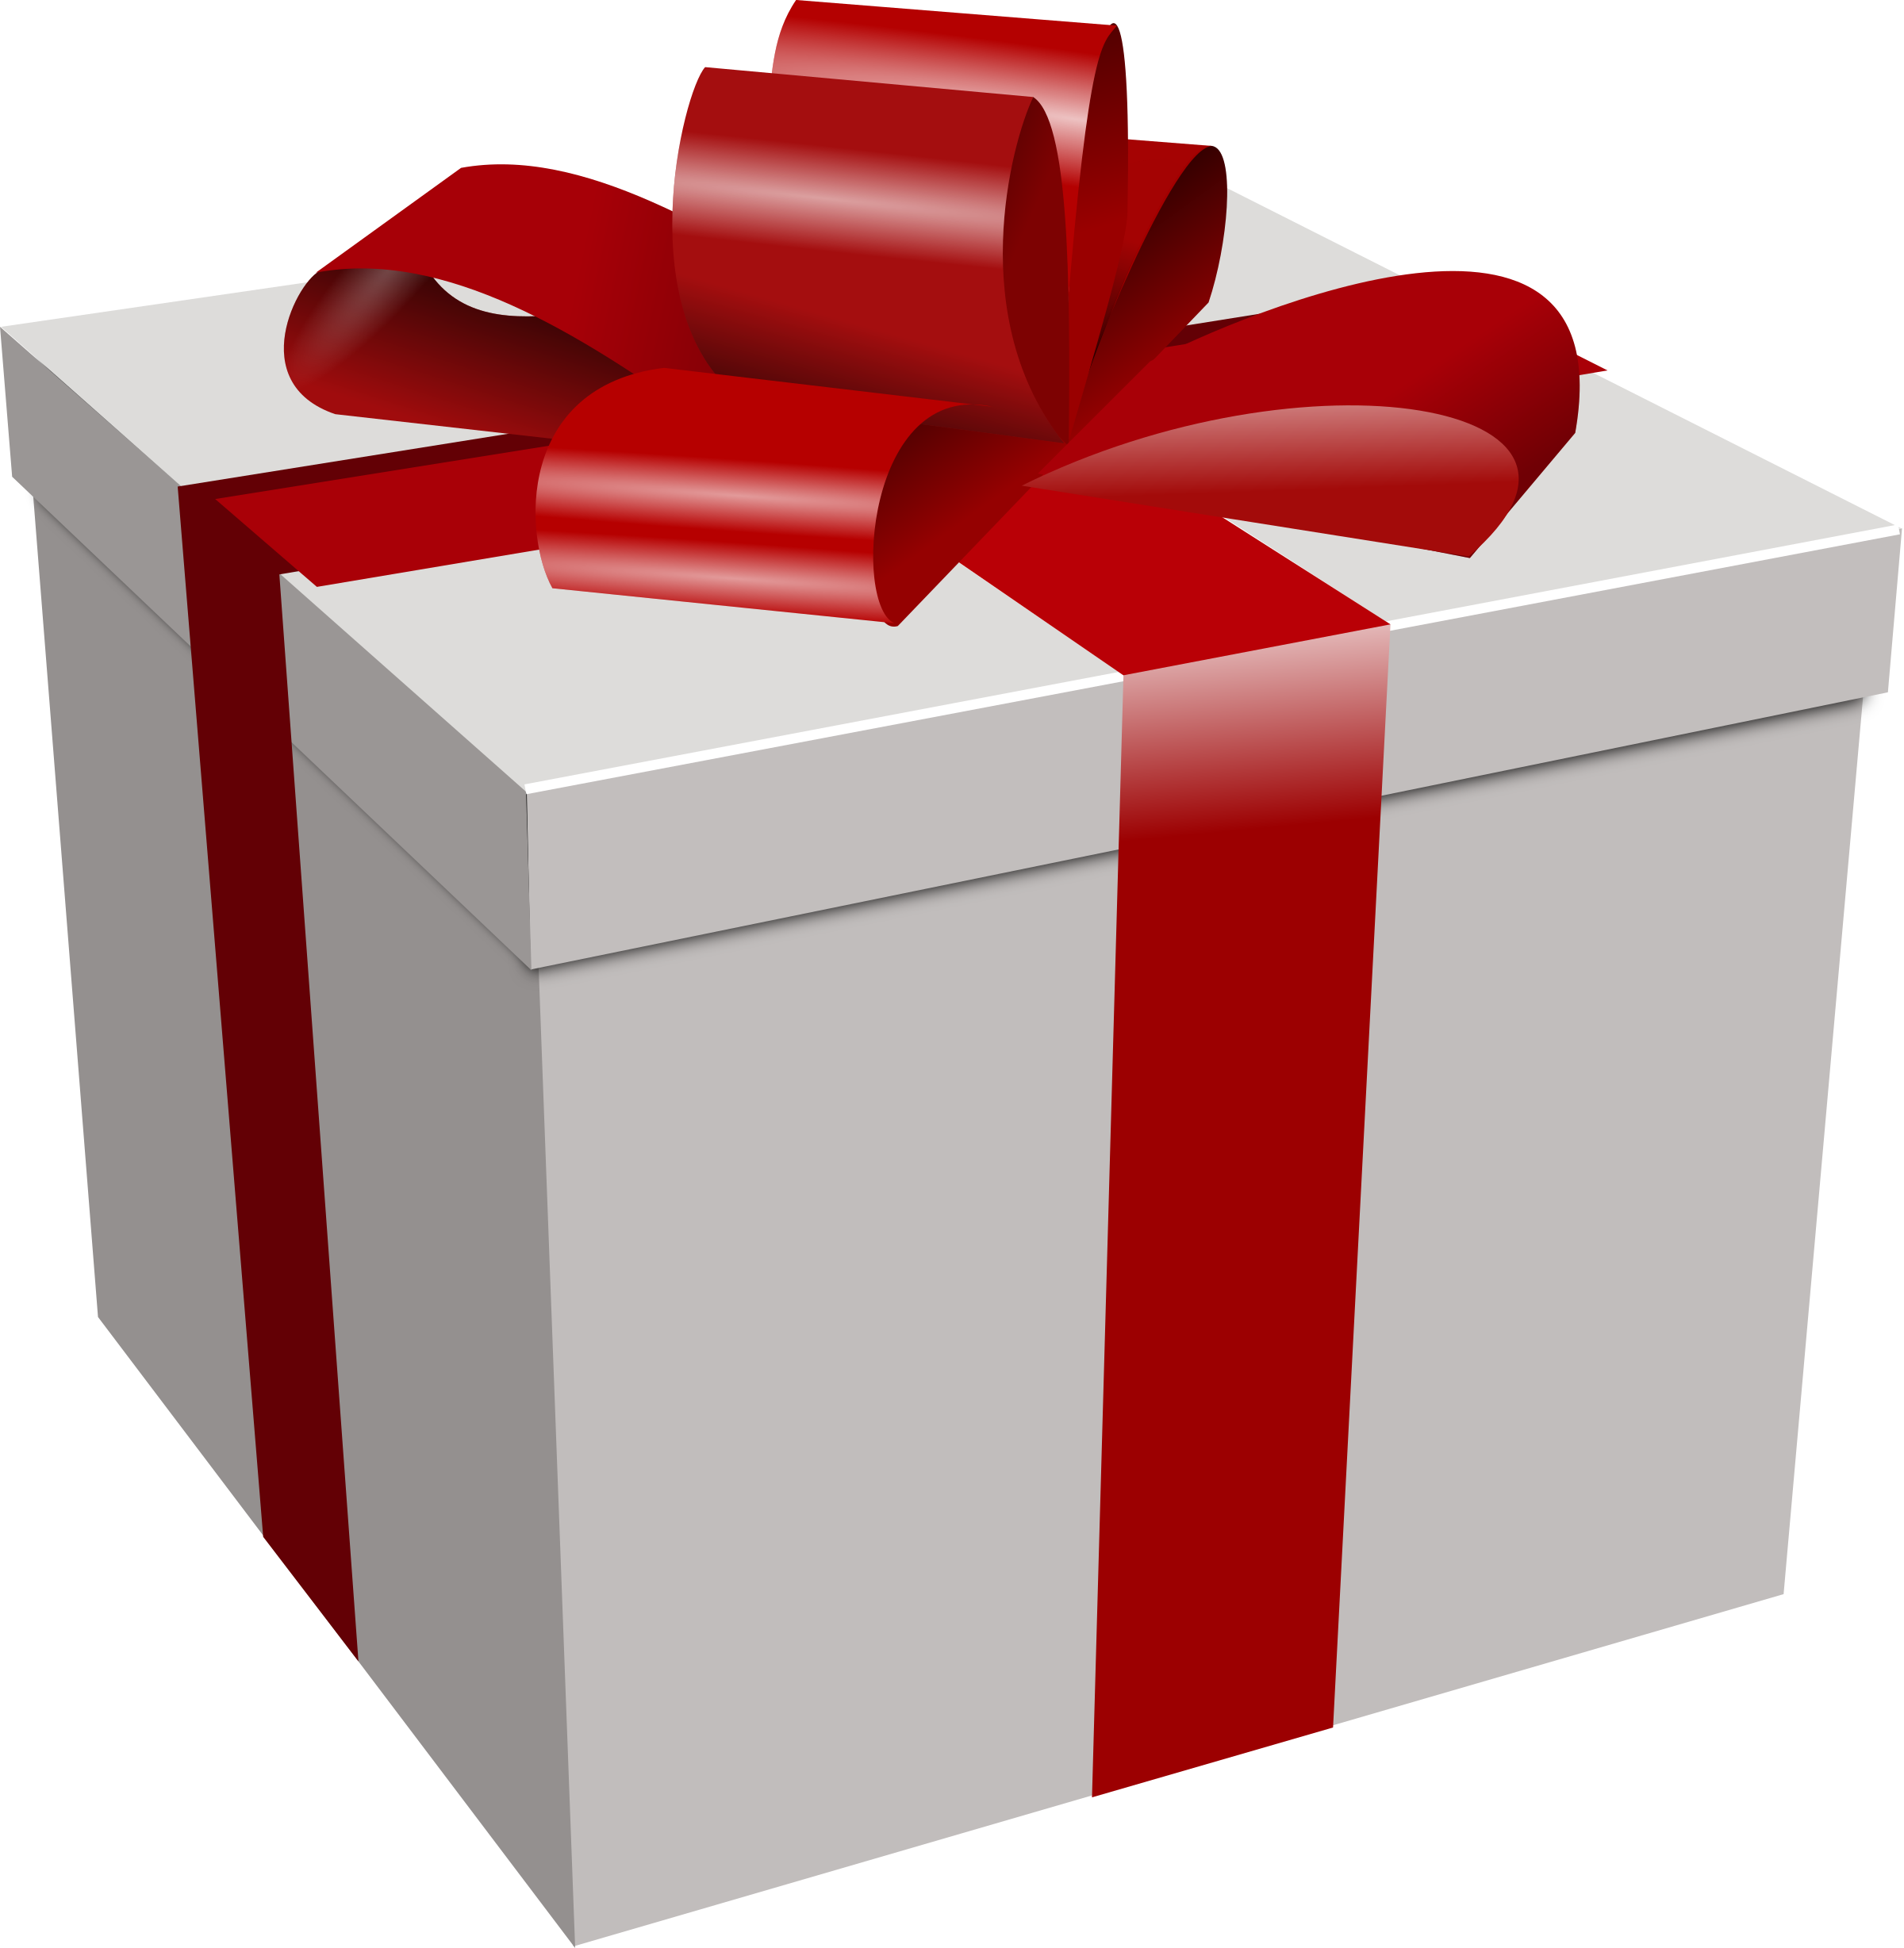 Clipart - Gift box